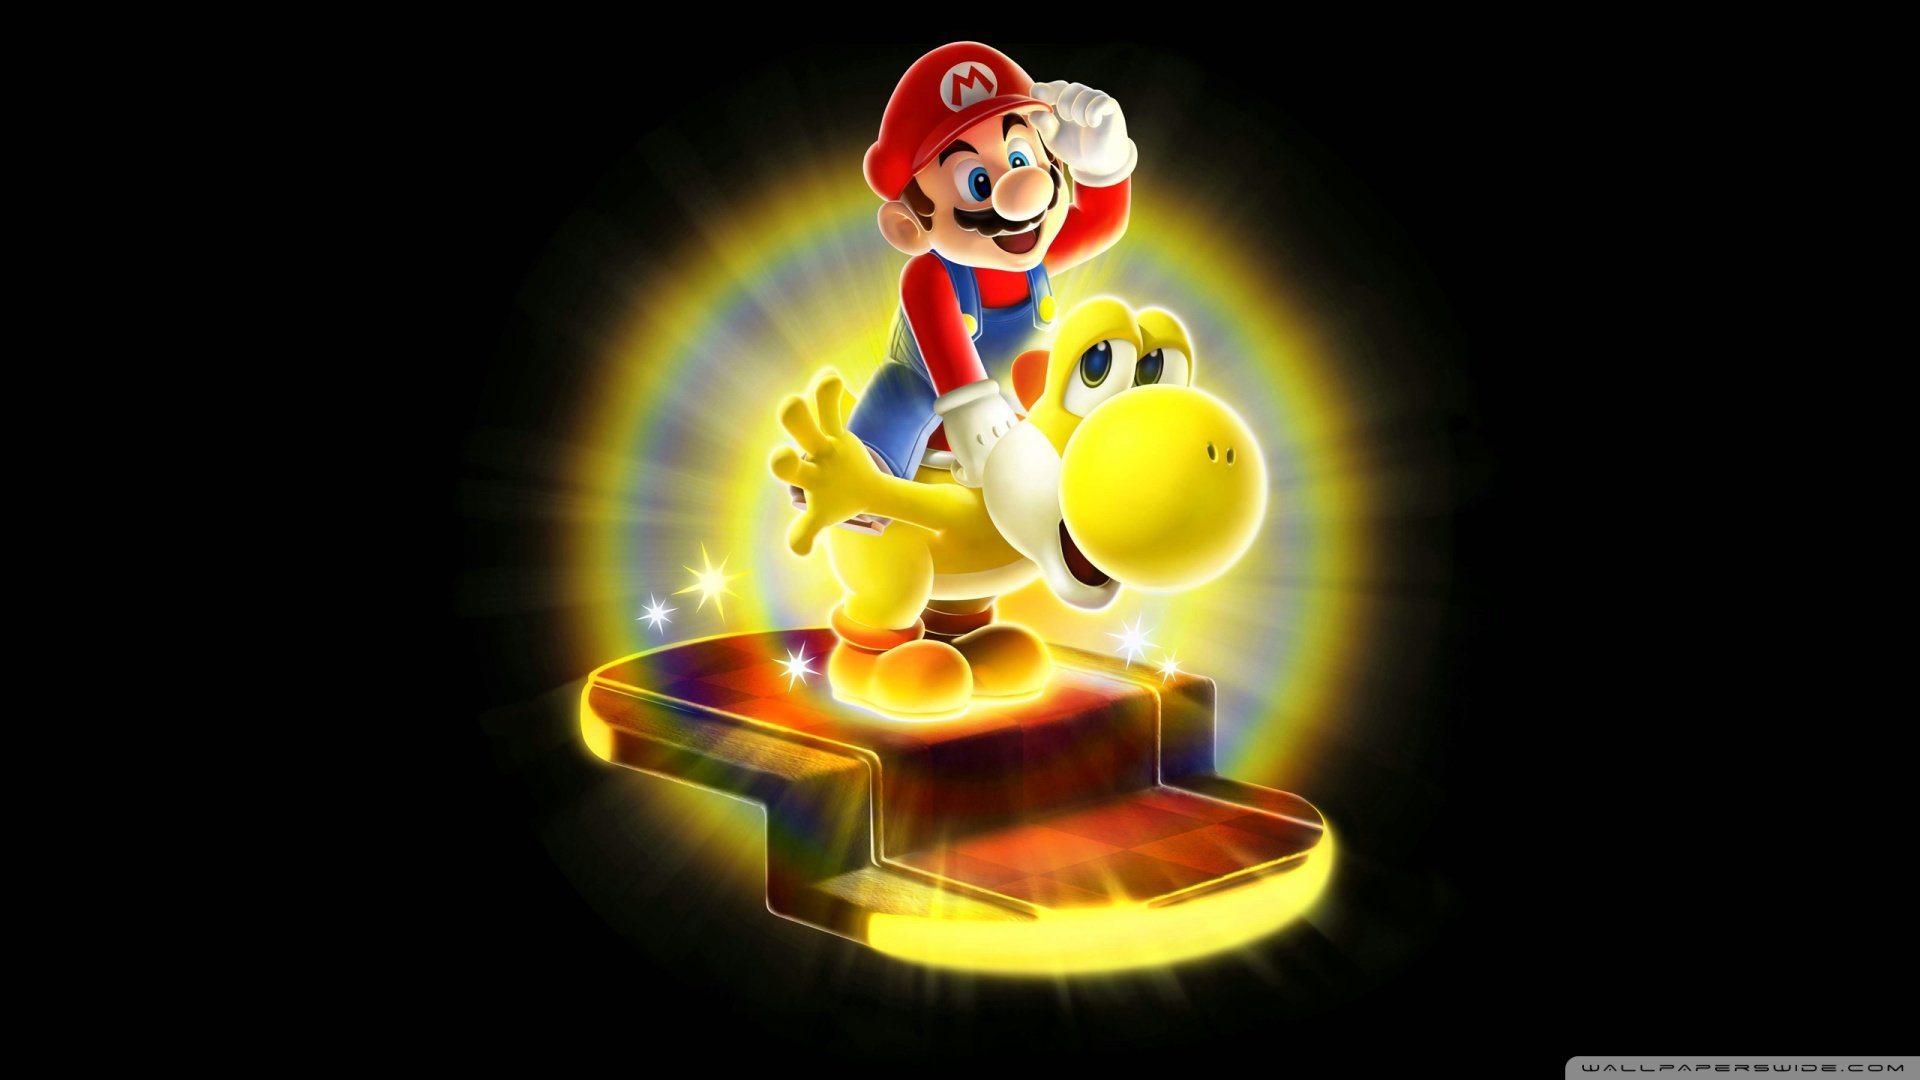 Best Super Mario Galaxy 2 wallpaper ID:7751 for High Resolution full hd PC